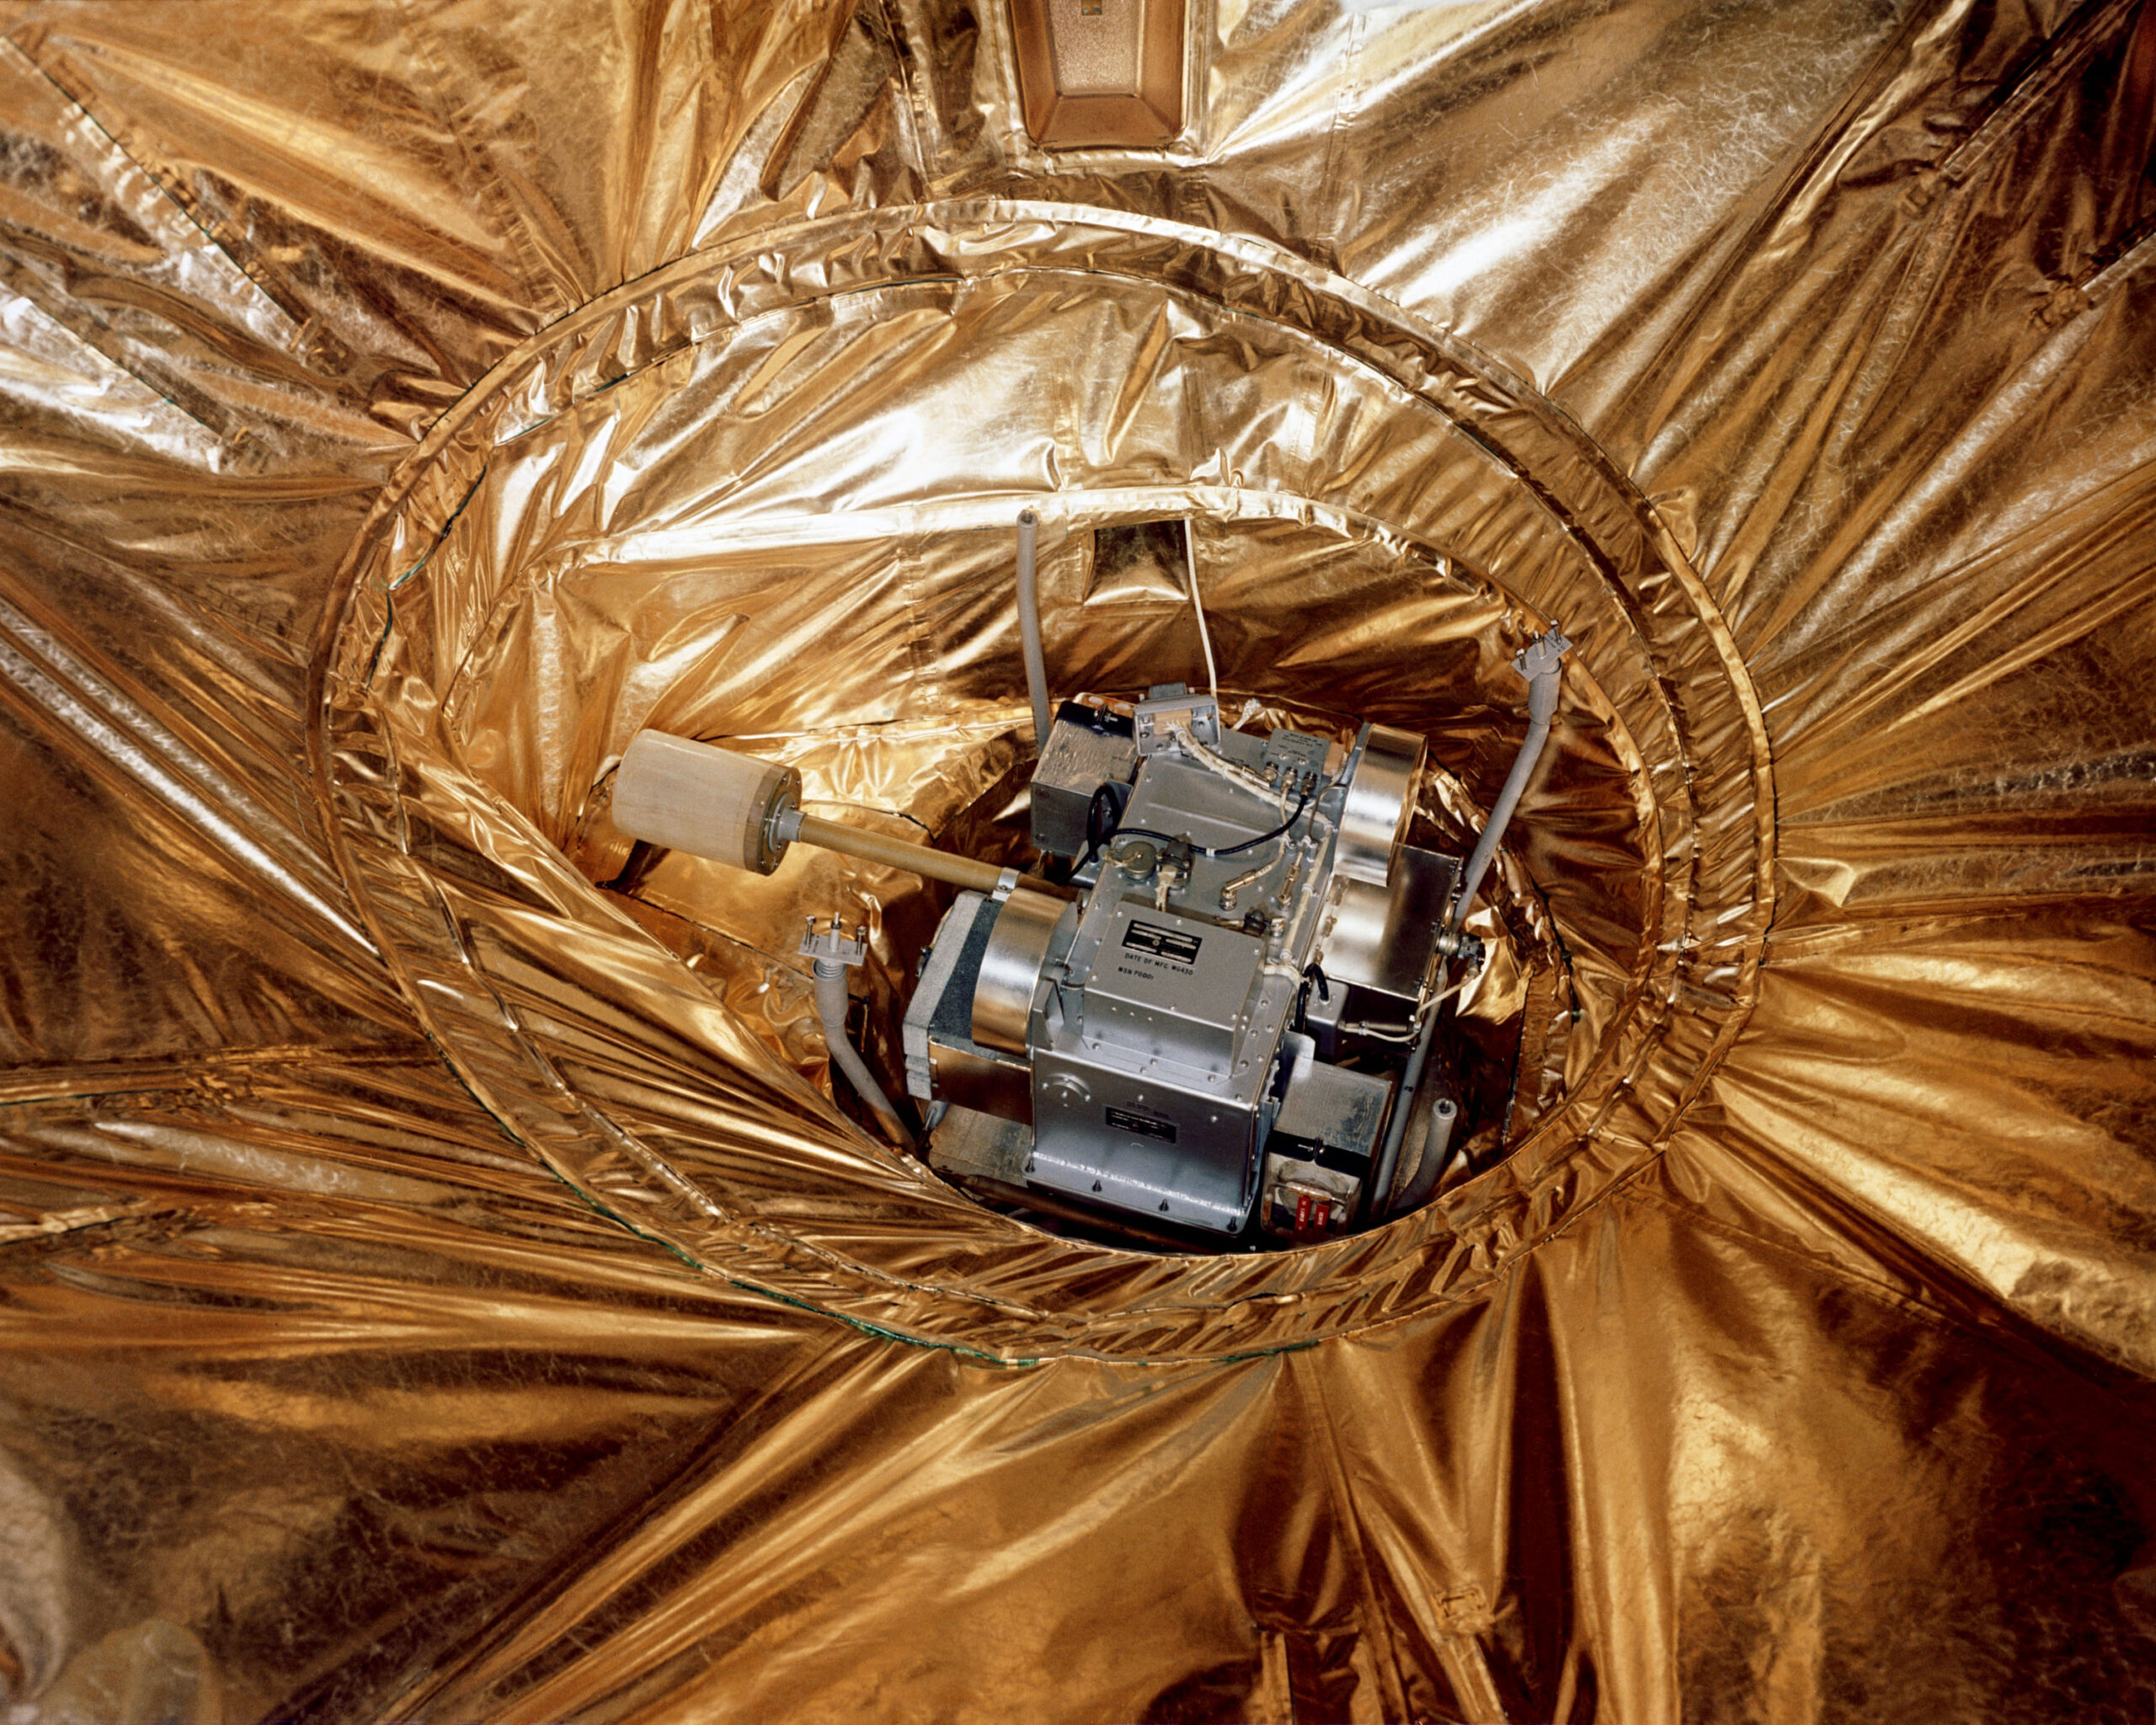 Meet the Gemini Radar Evaluation Pod